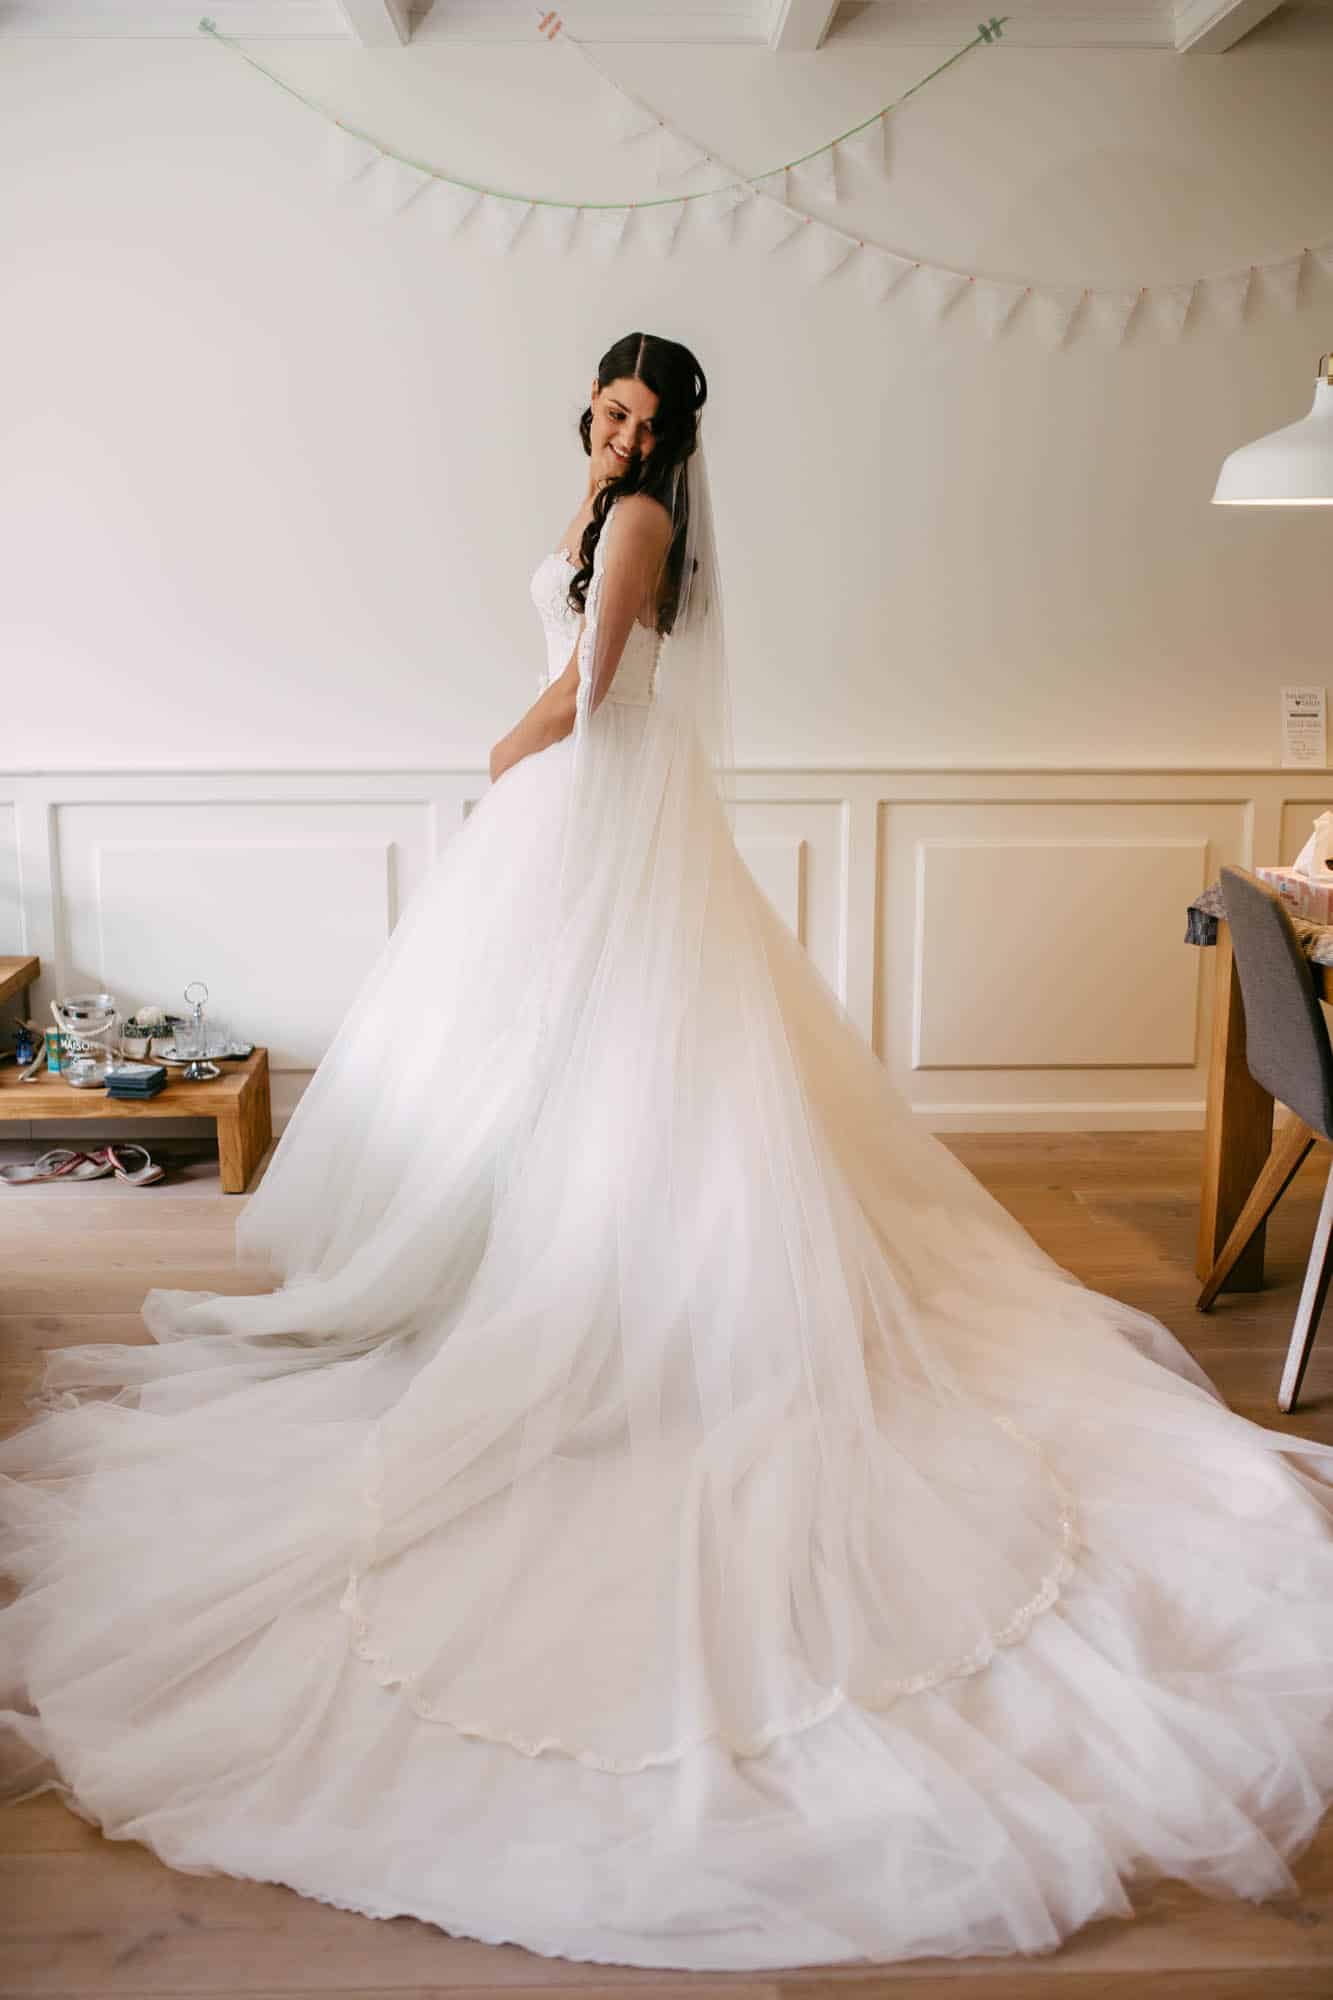 A bride wearing a beautiful A-line wedding dress looks graceful in a room.